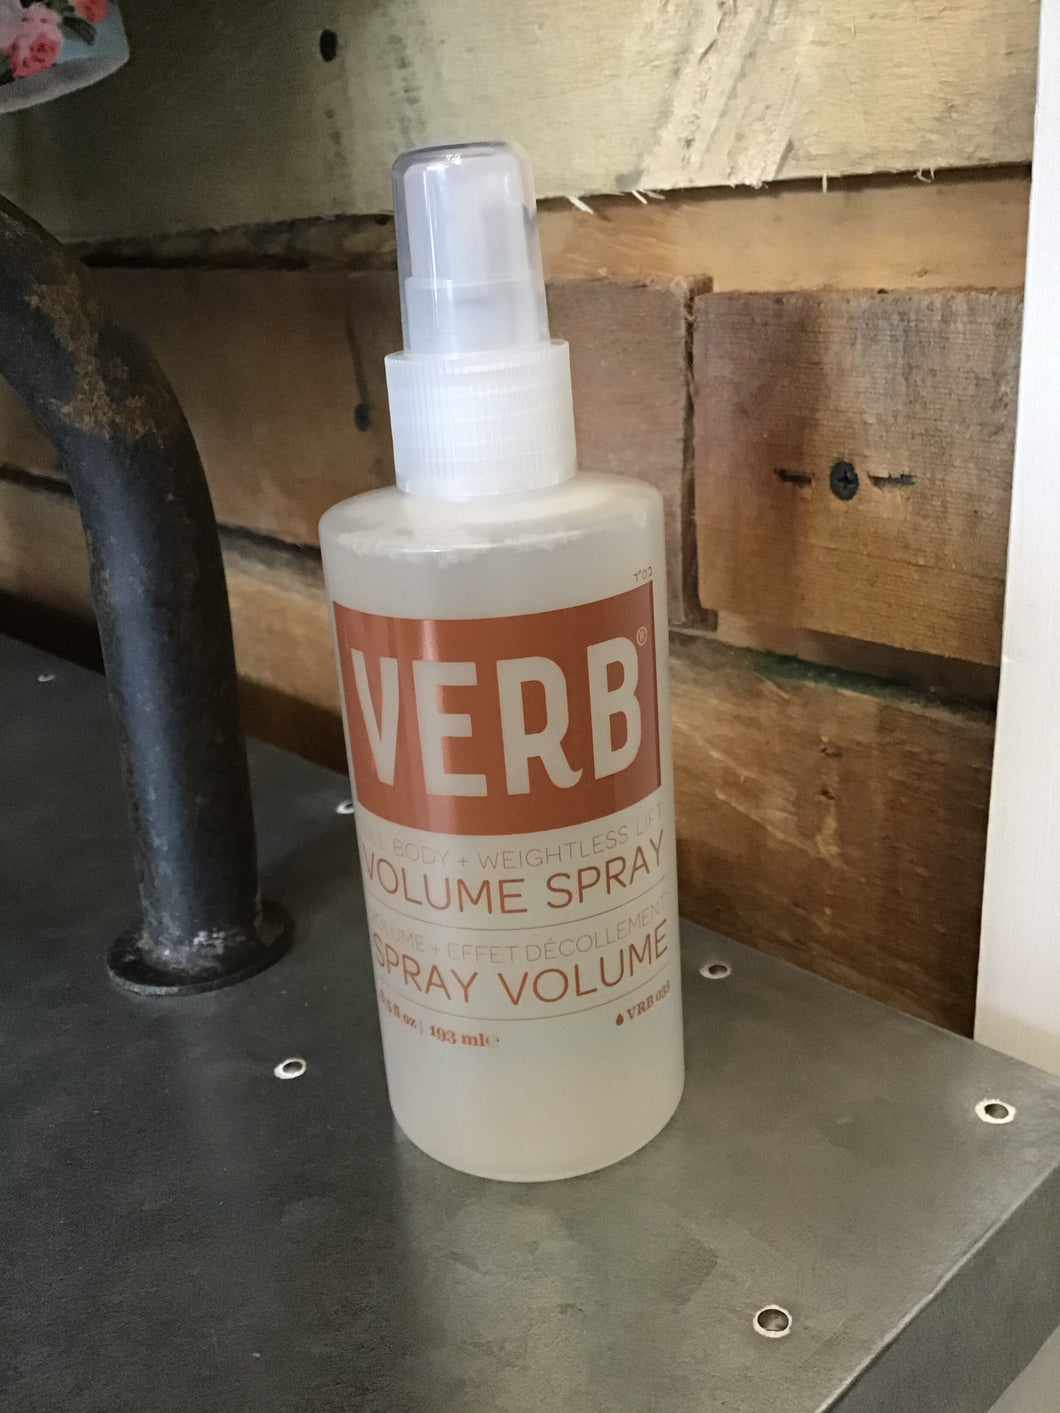 VERB Volume spray